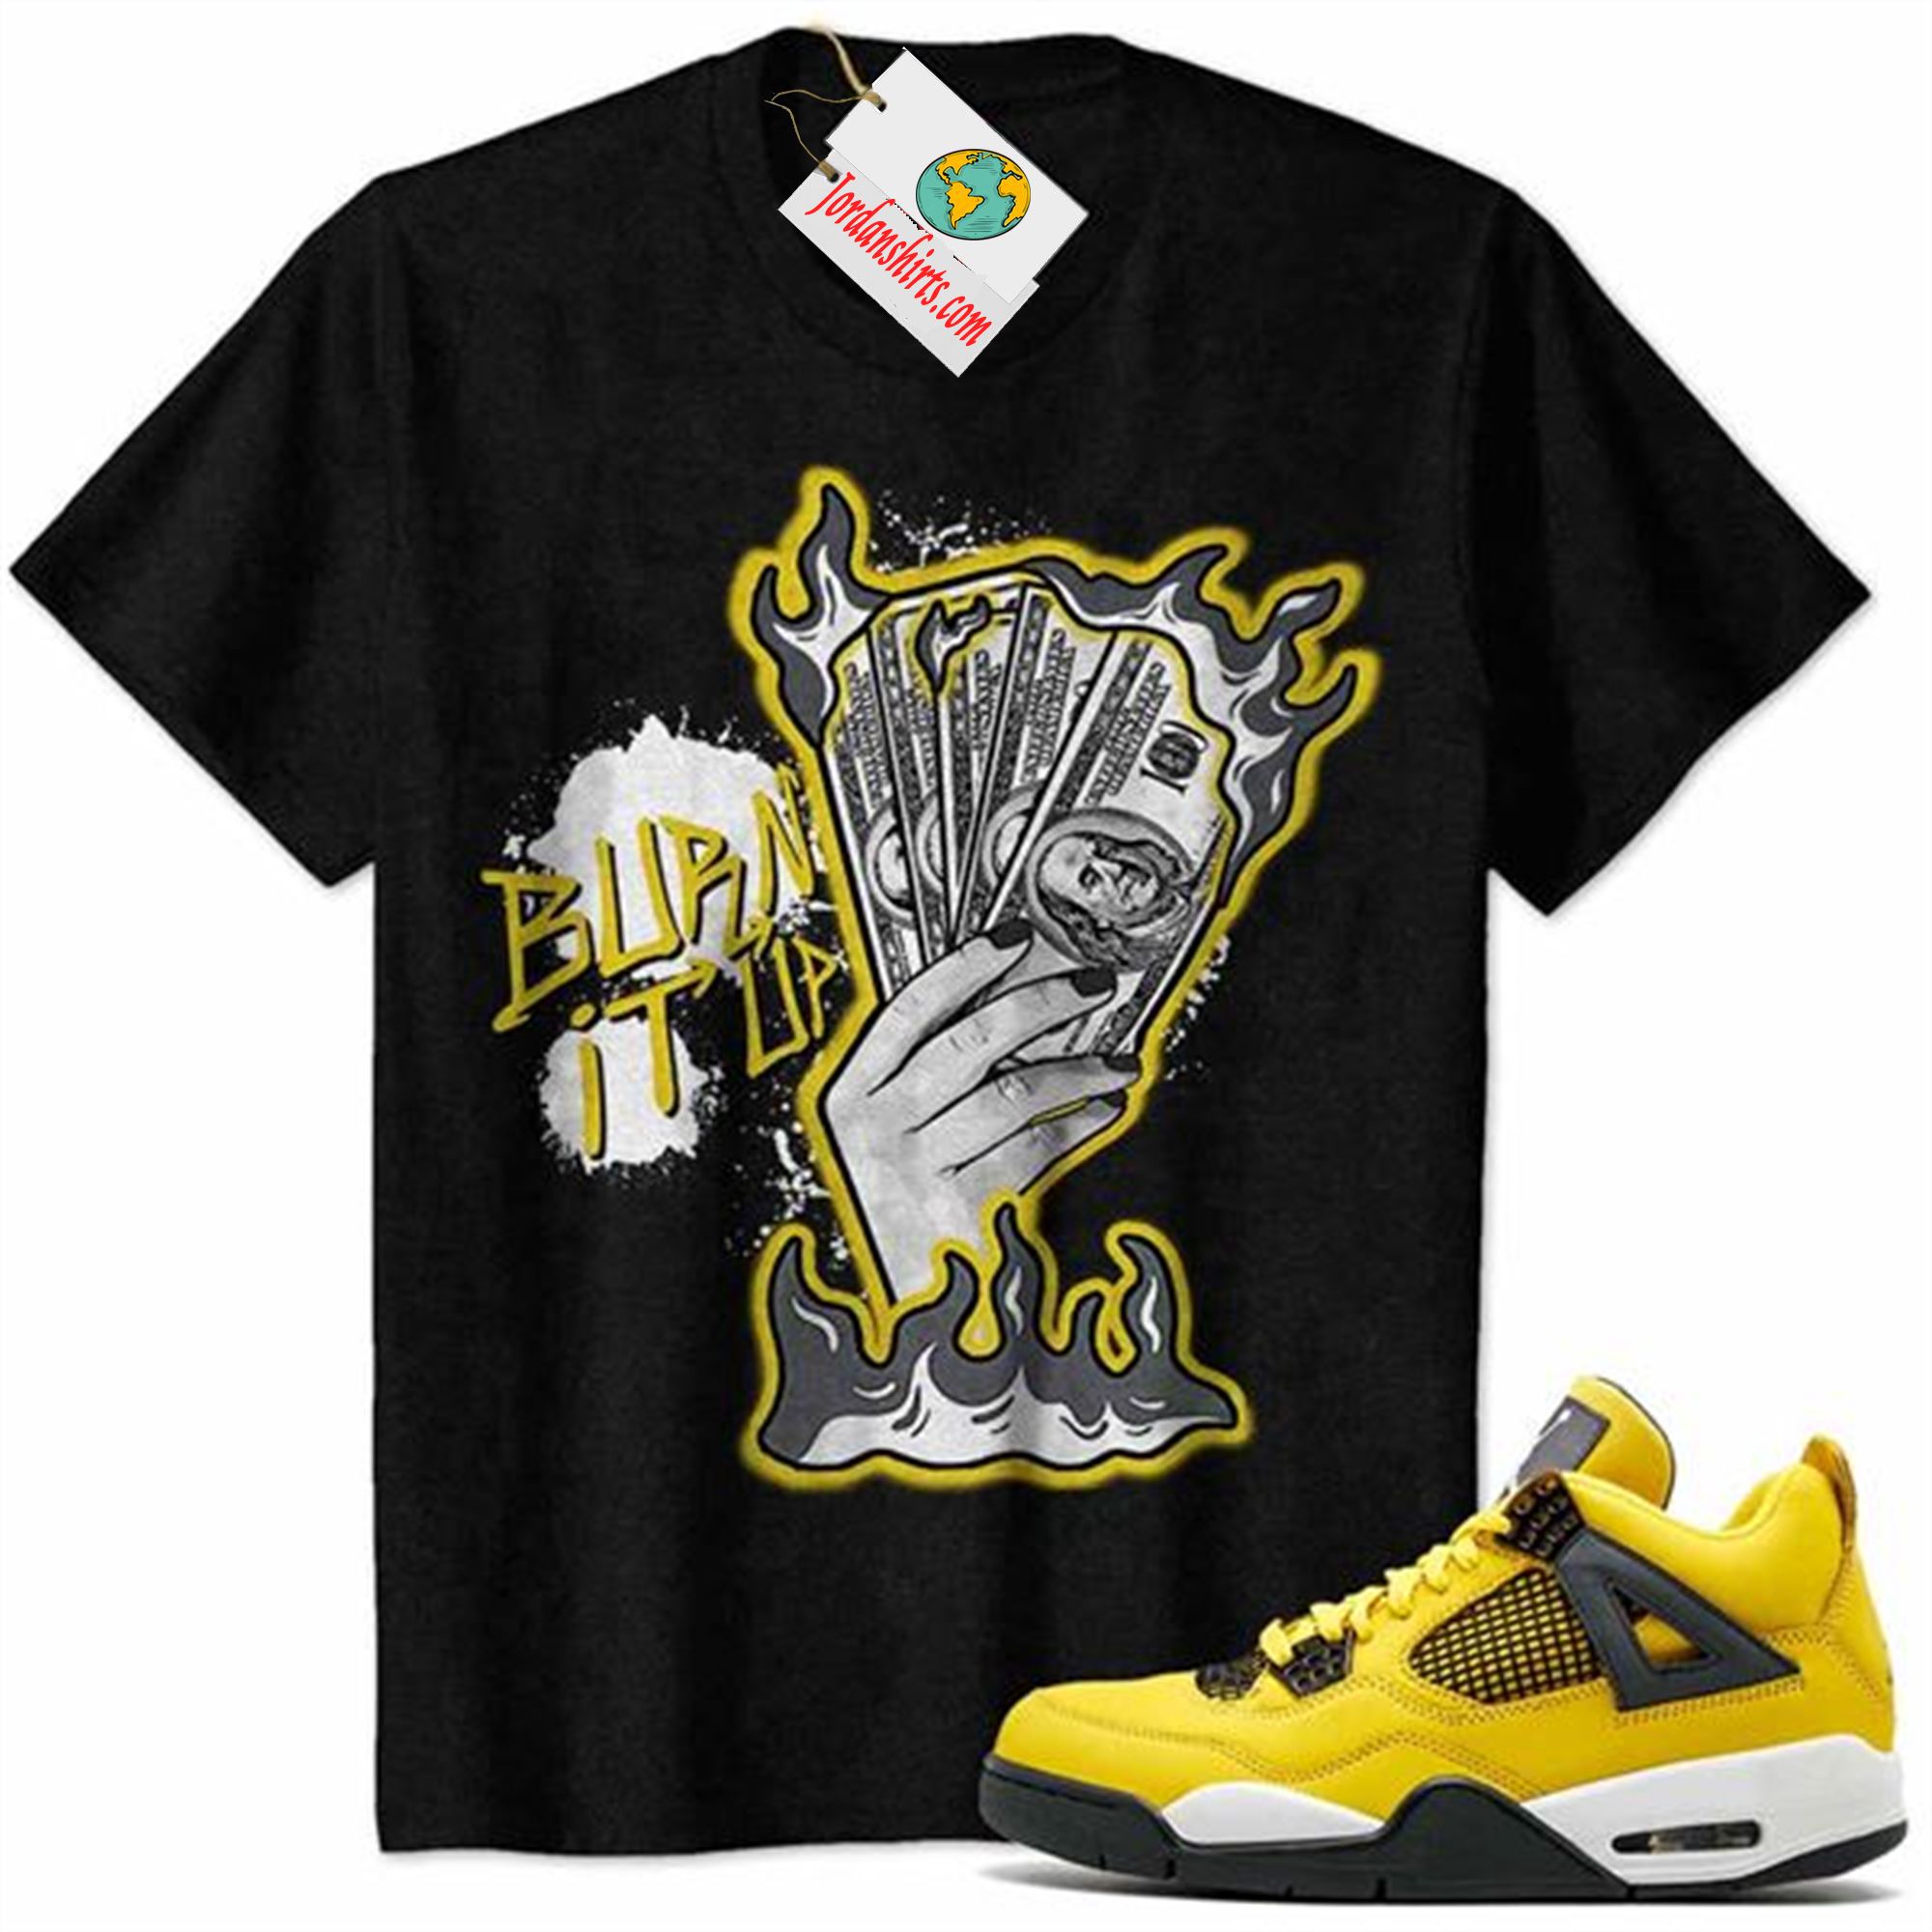 Jordan 4 Shirt, Burn It Up Black Air Jordan 4 Tour Yellow Lightning 4s Full Size Up To 5xl